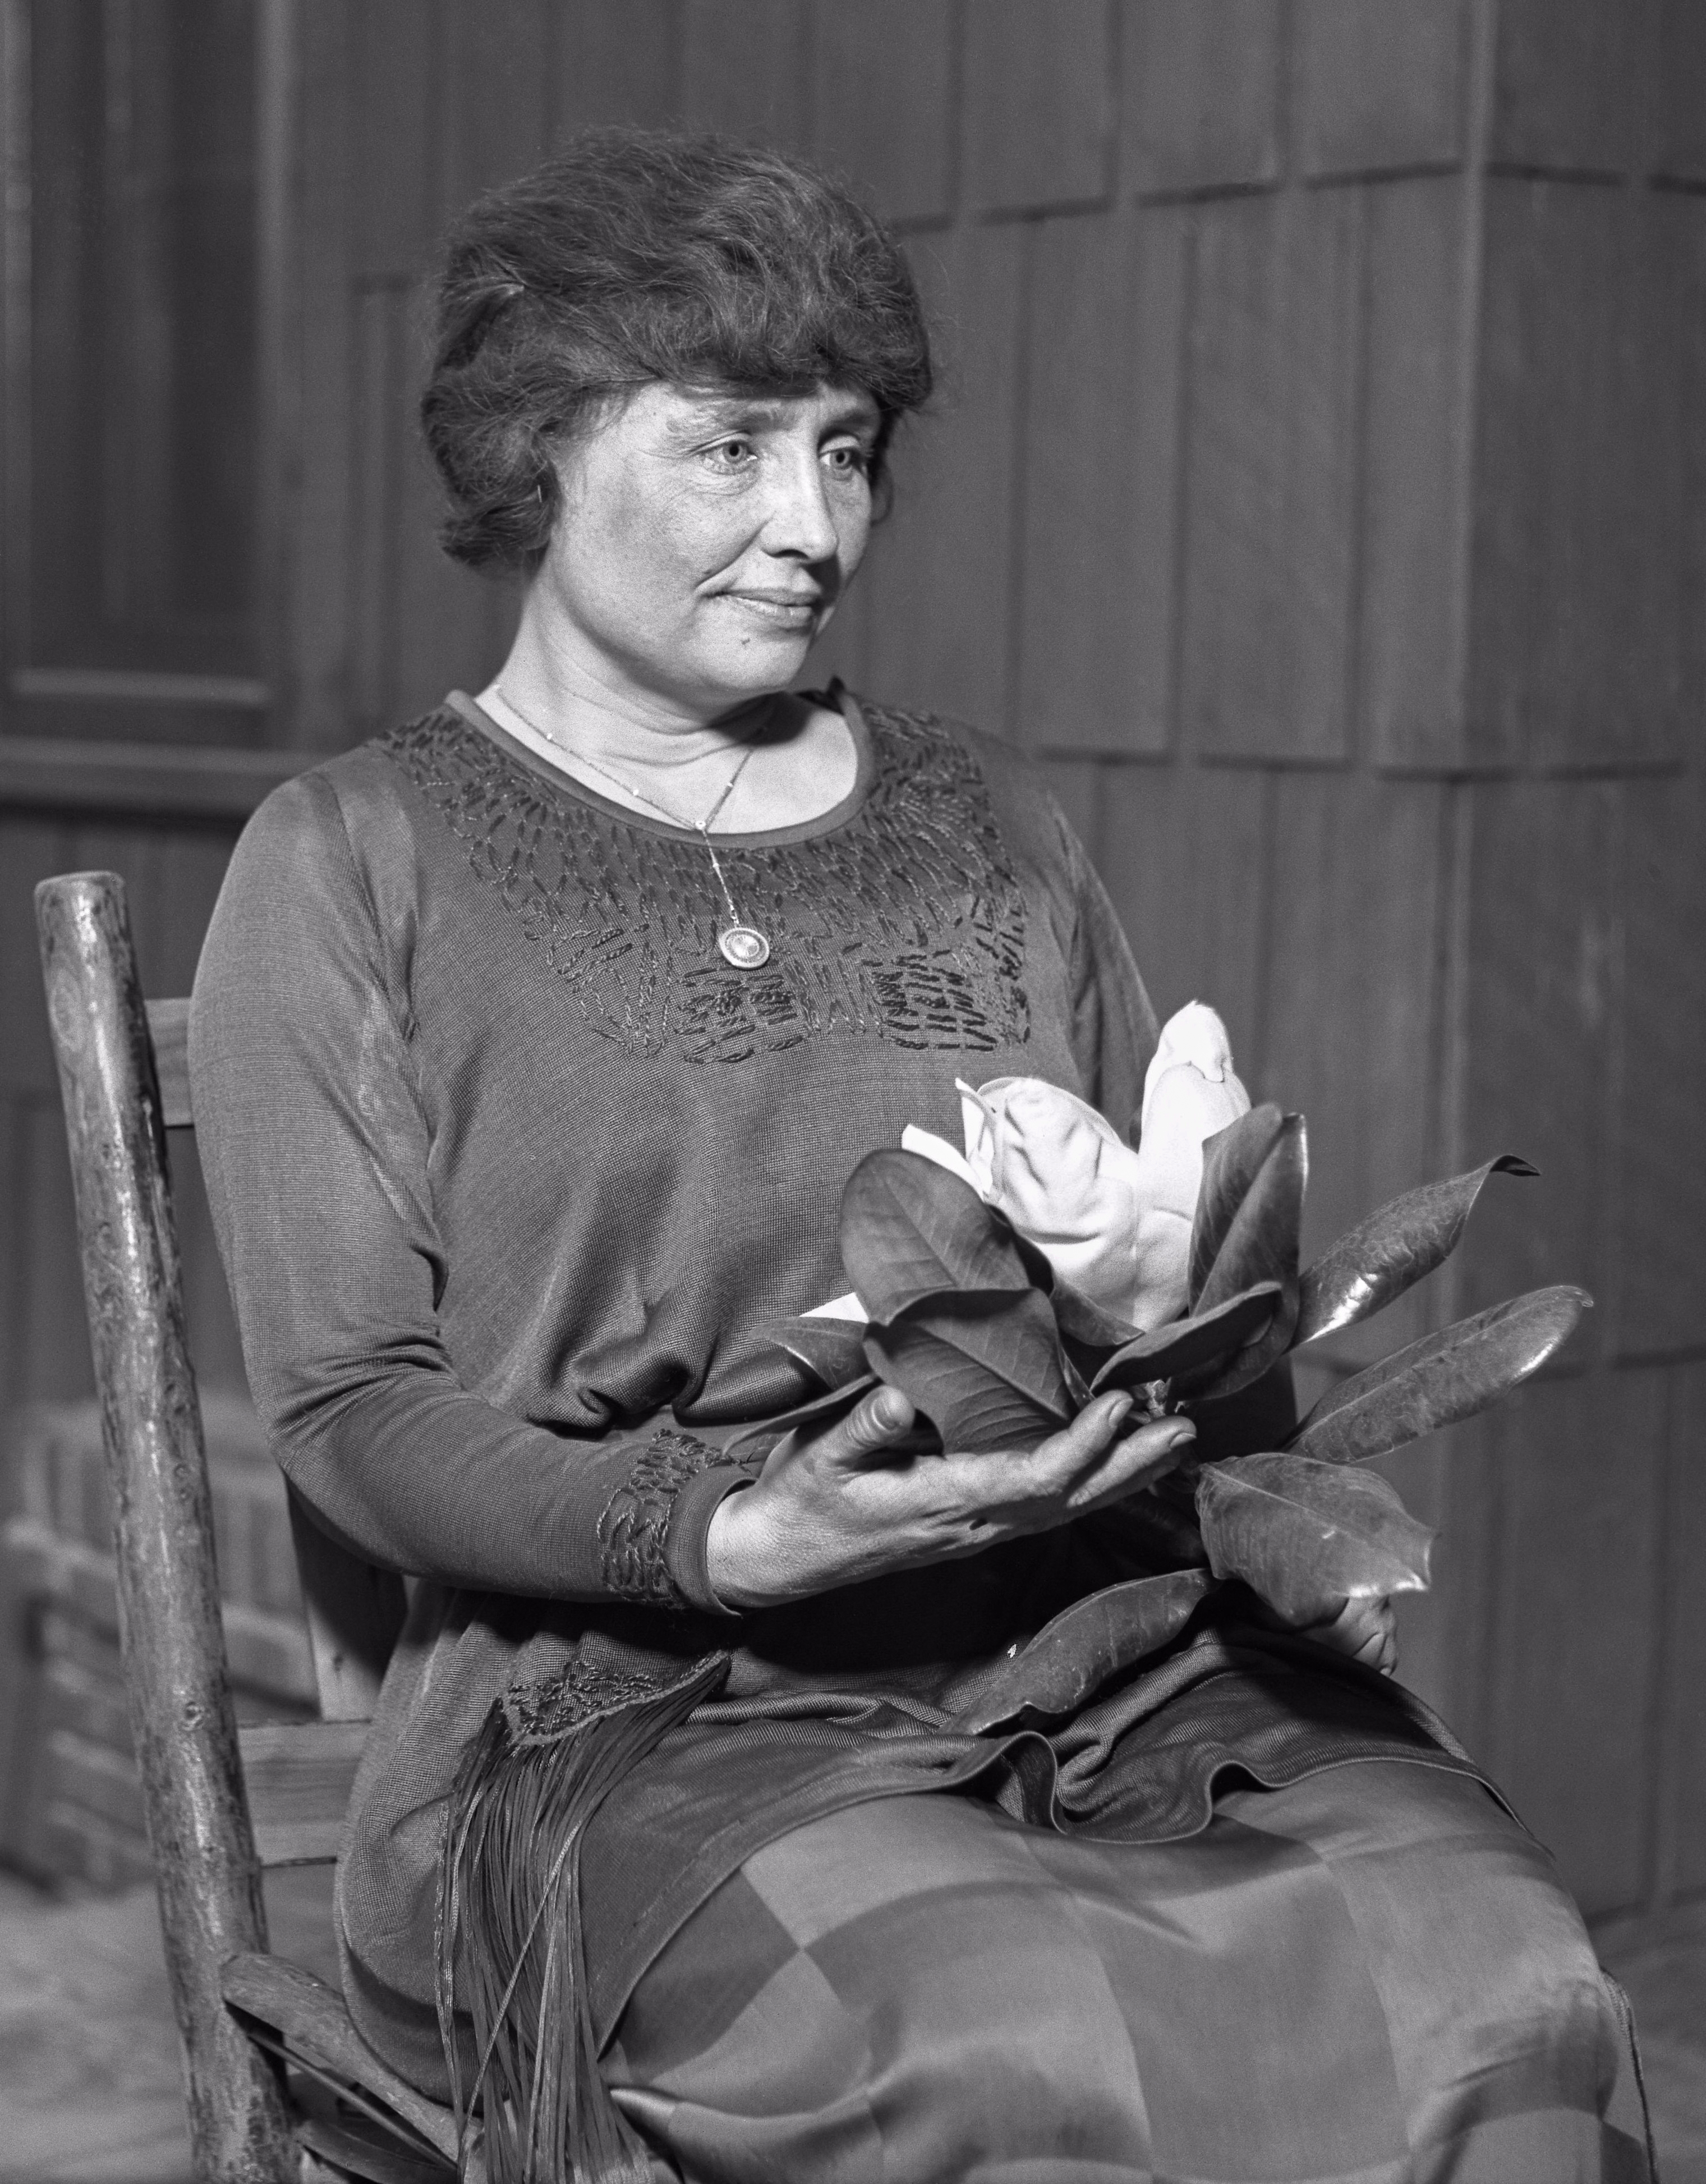 Portrait of Helen Keller